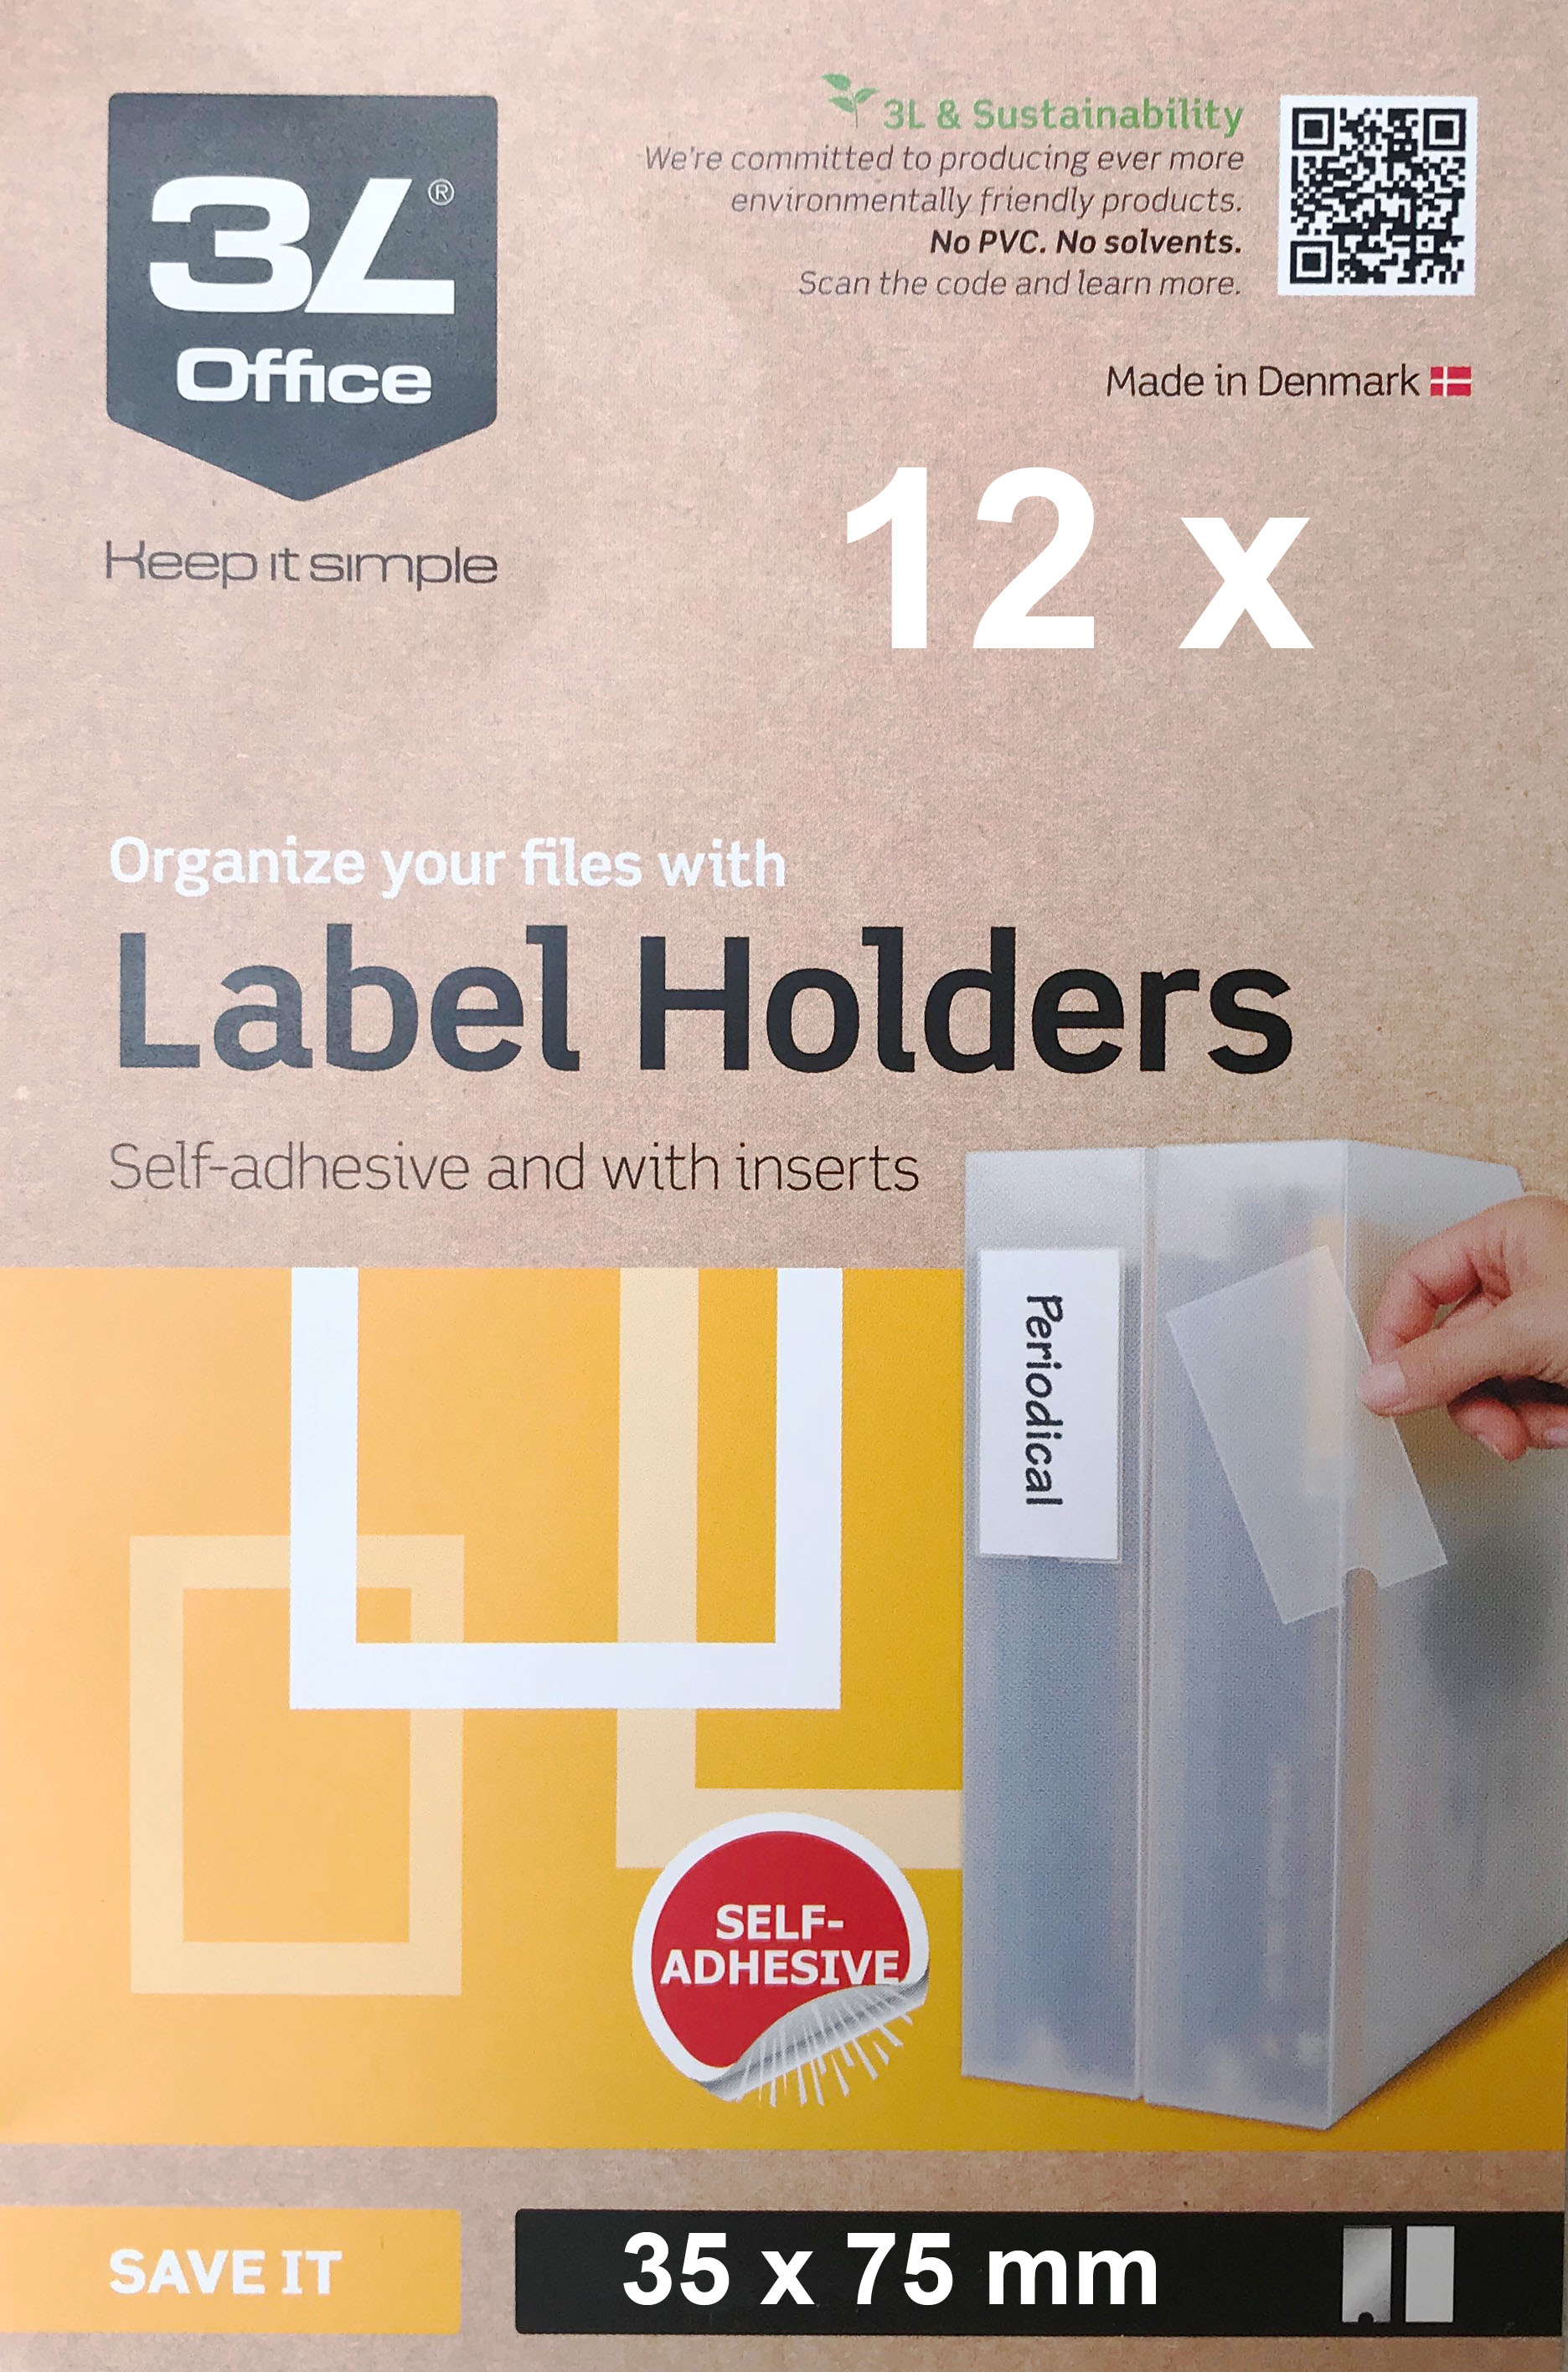 3L Label holders - 35 x 75 mm